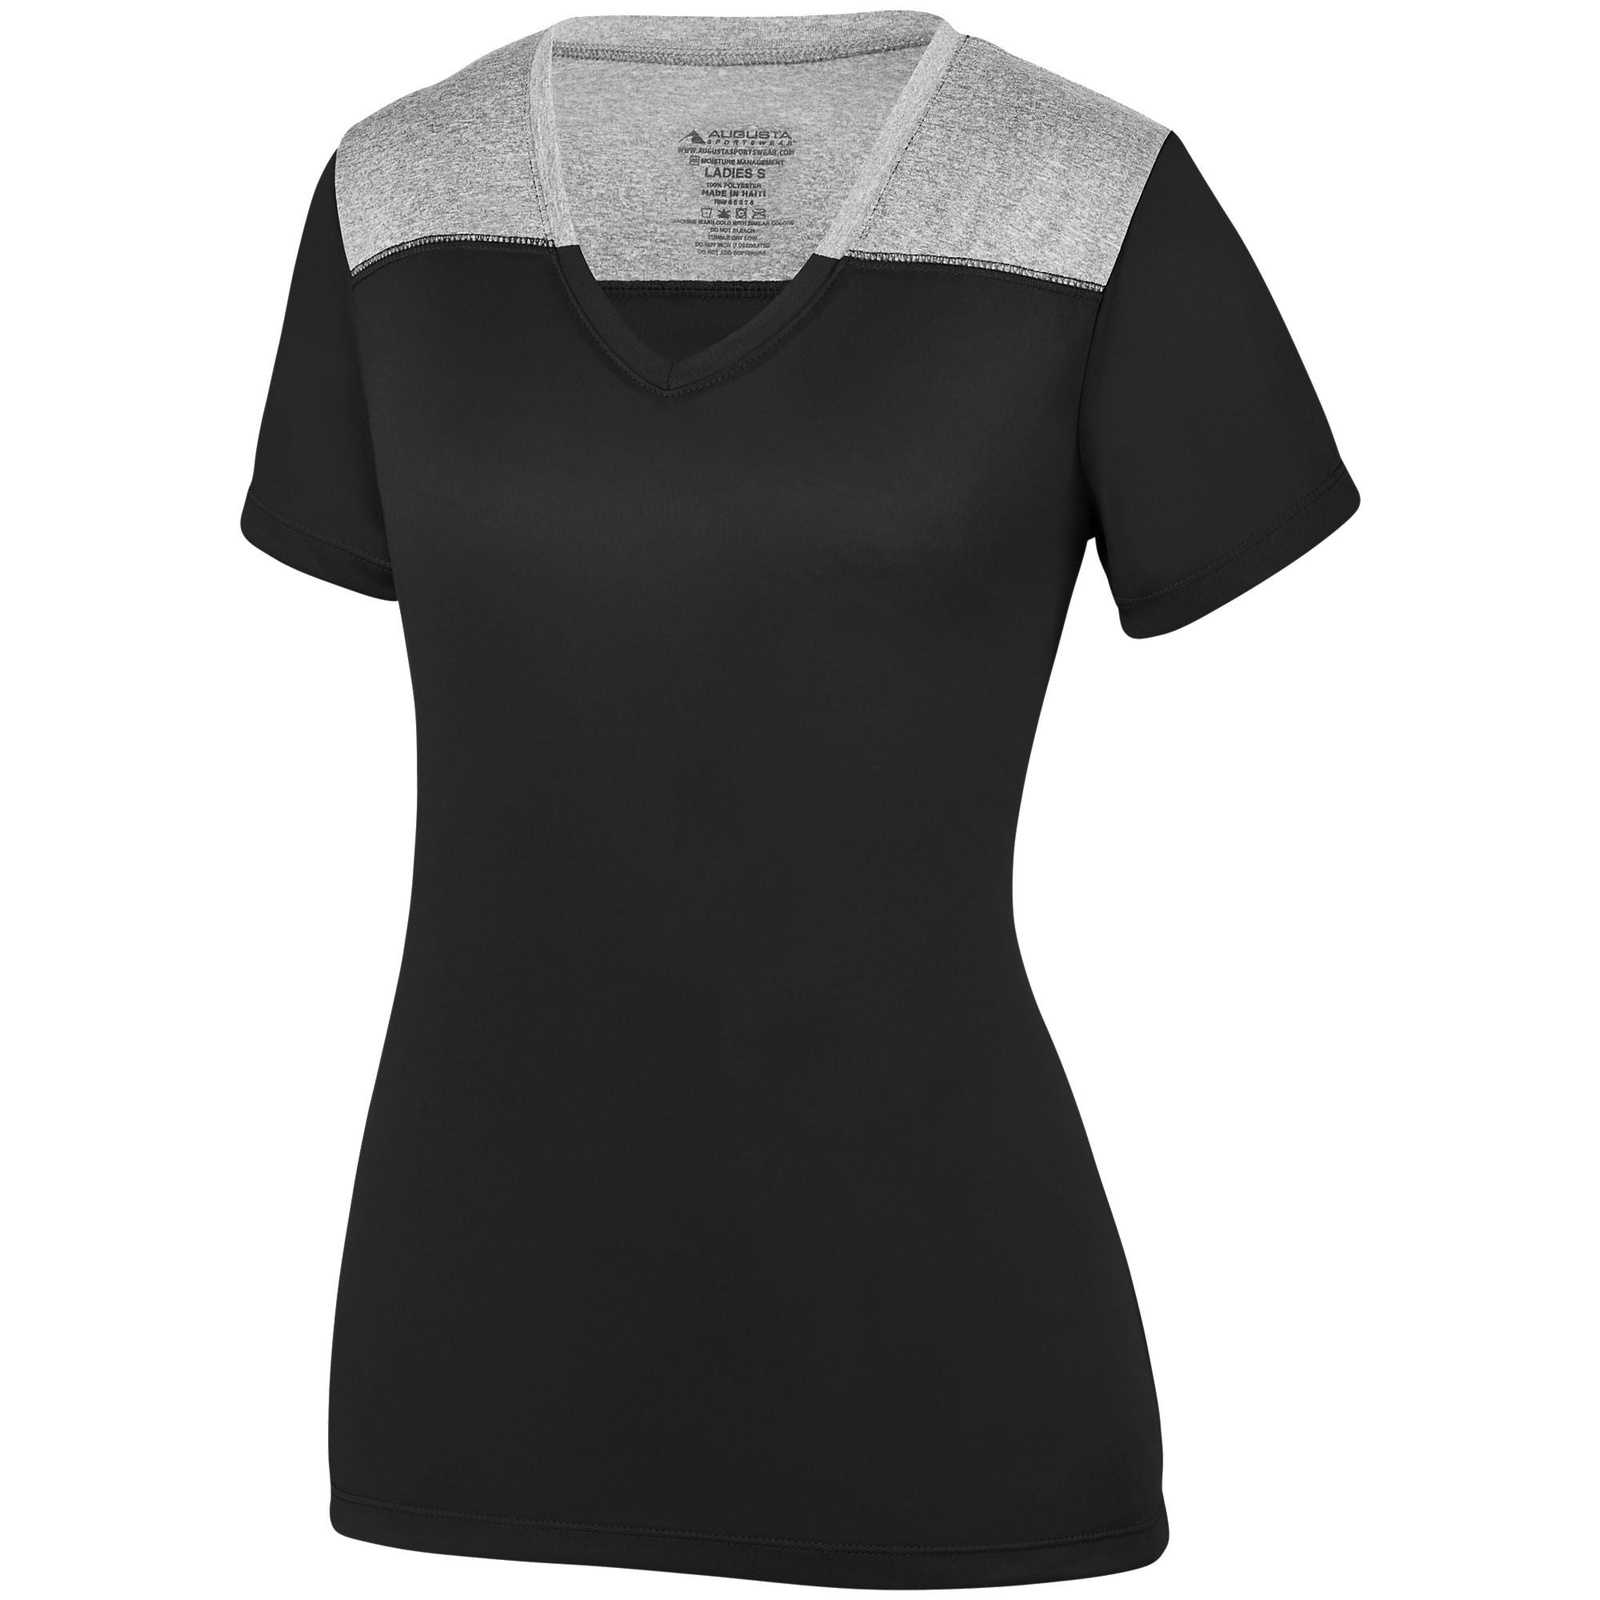 Augusta 3057 Ladies Challenge T-Shirt - Black Graphite Heather - HIT a Double